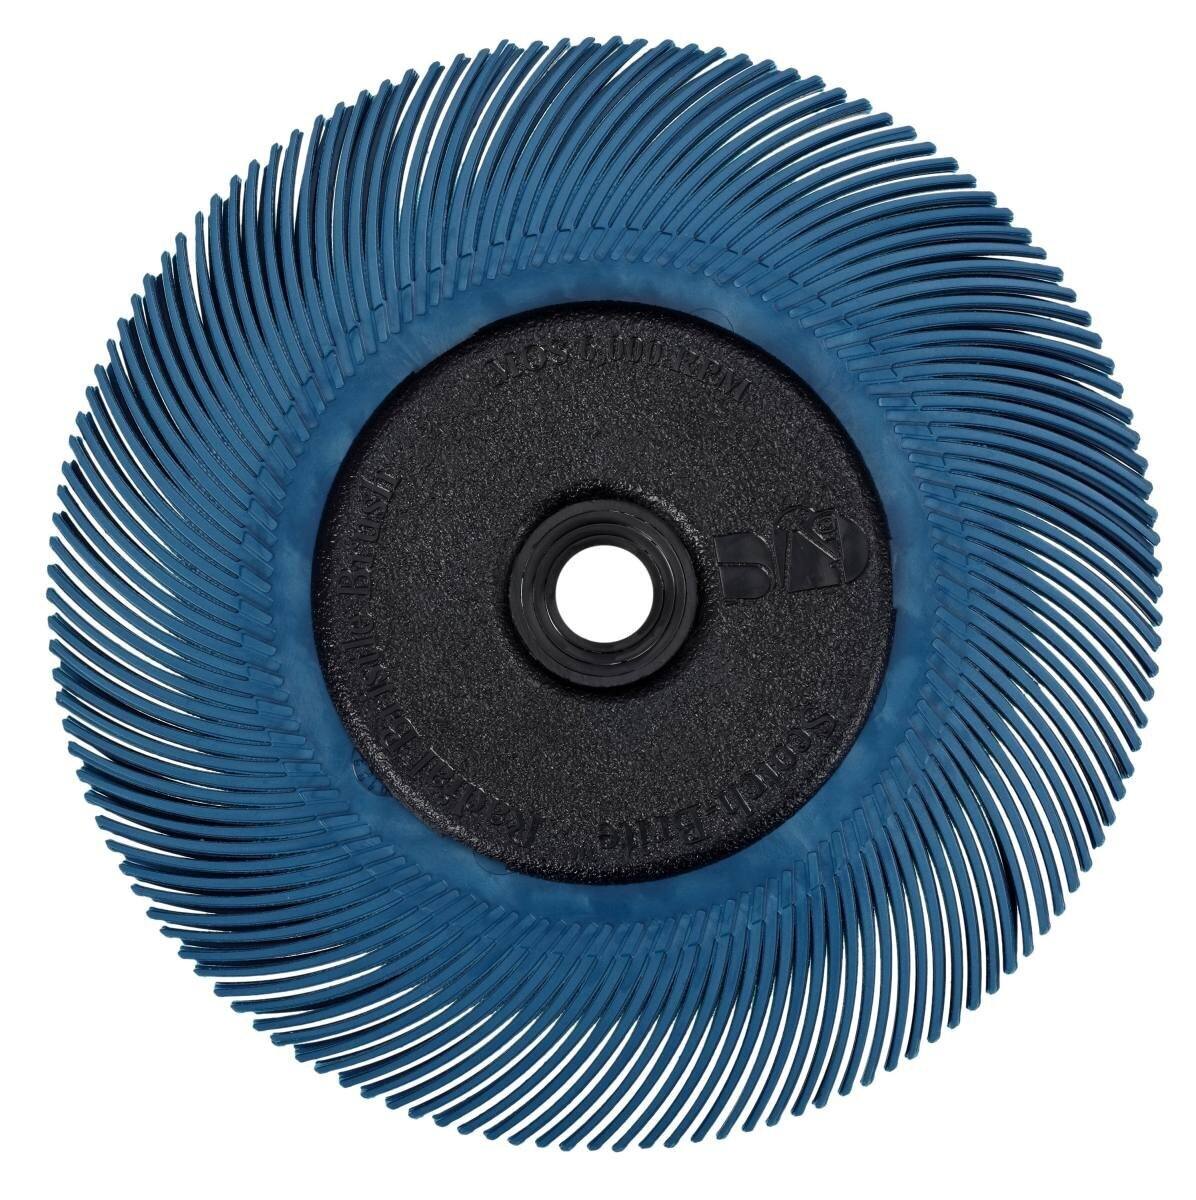 3M Scotch-Brite radiale borstelschijf BB-ZB met flens, blauw, 193,5 mm, P400, type C #33085